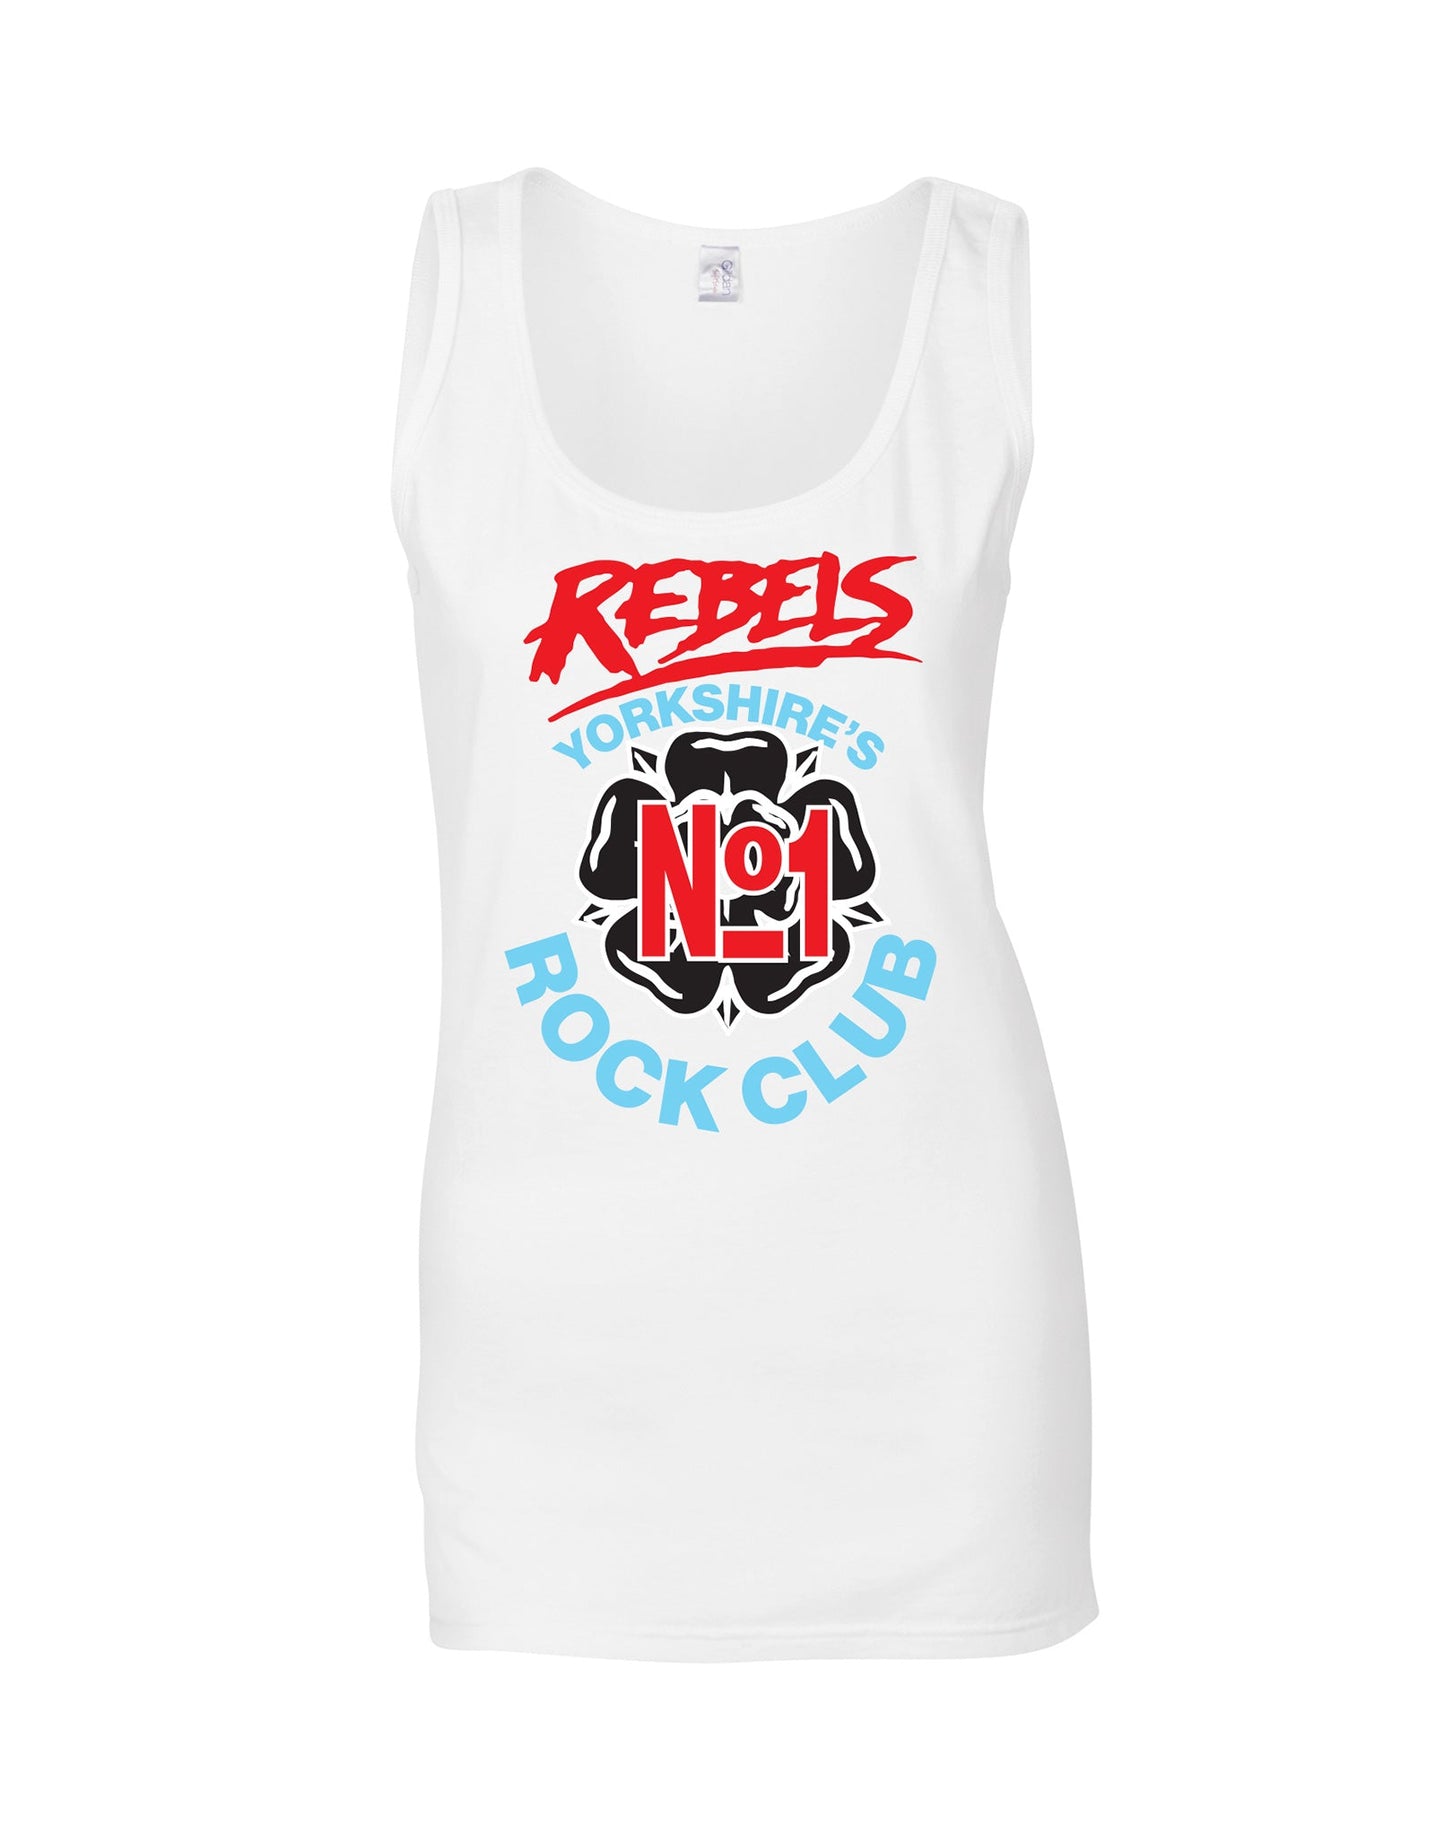 Rebels No. 1 rock club ladies fit vest - various colours - Dirty Stop Outs